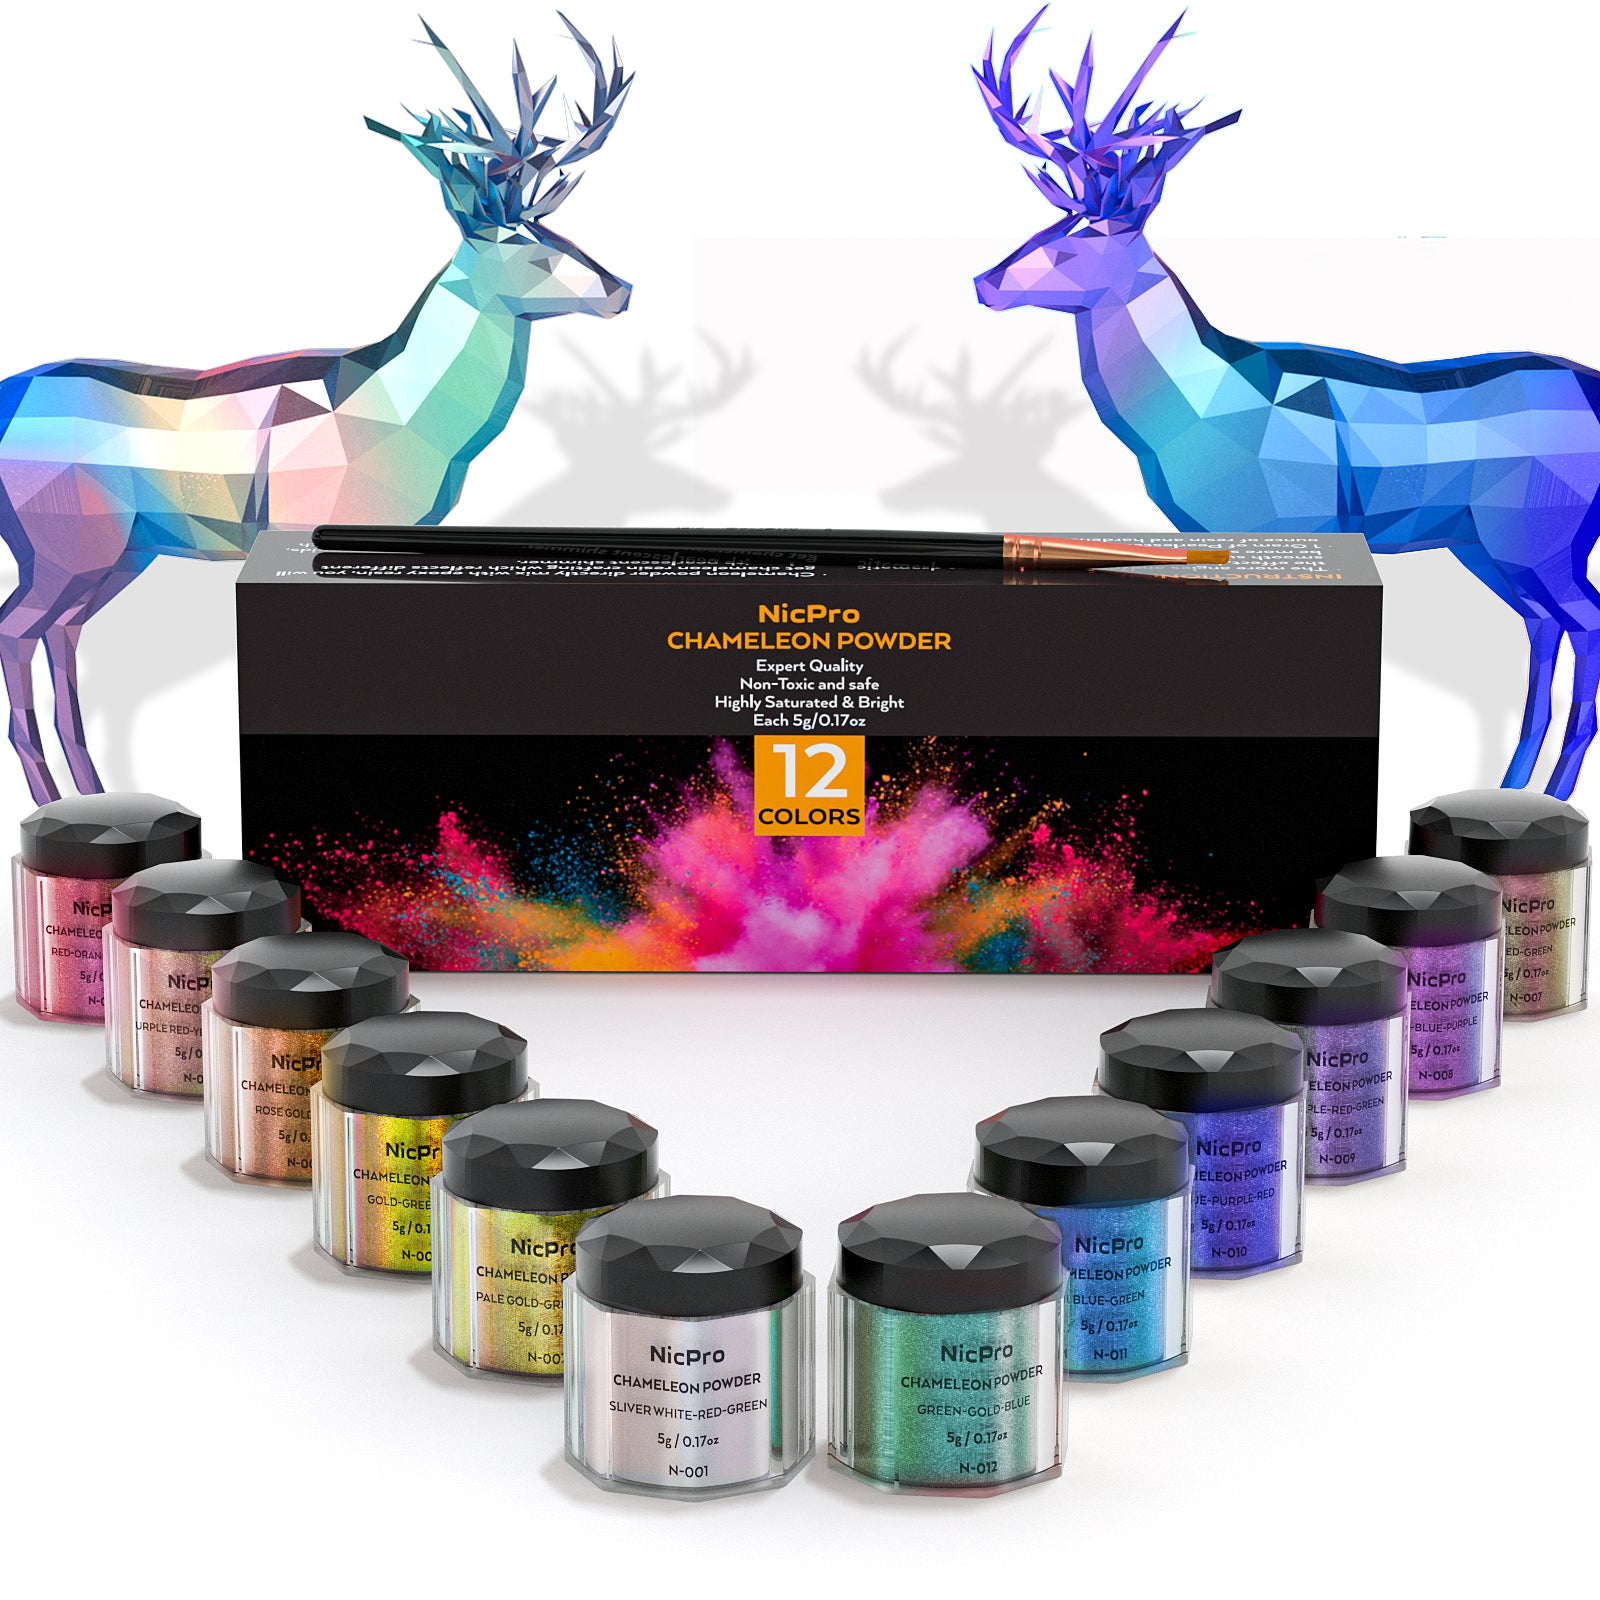 Nicpro 12 Color Chameleon Powder Set, Color-Shifting Mica Powder for E